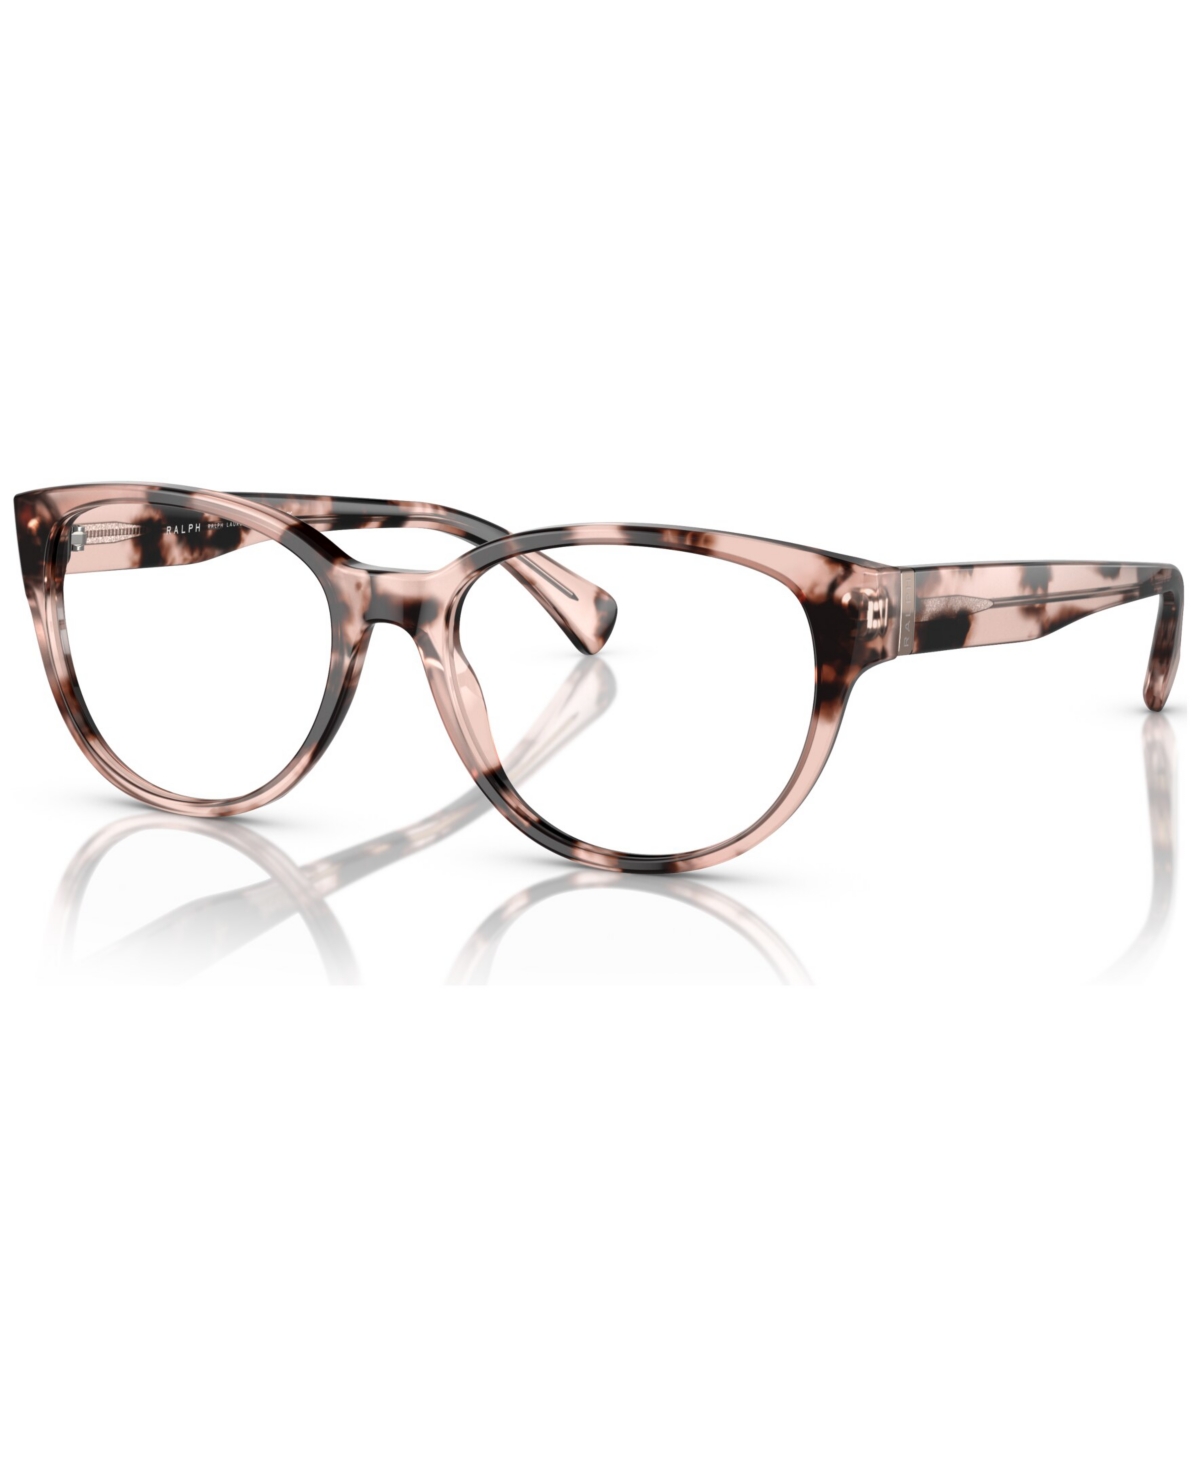 Women's Oval Eyeglasses, RA7151 54 - Shiny Rose Havana